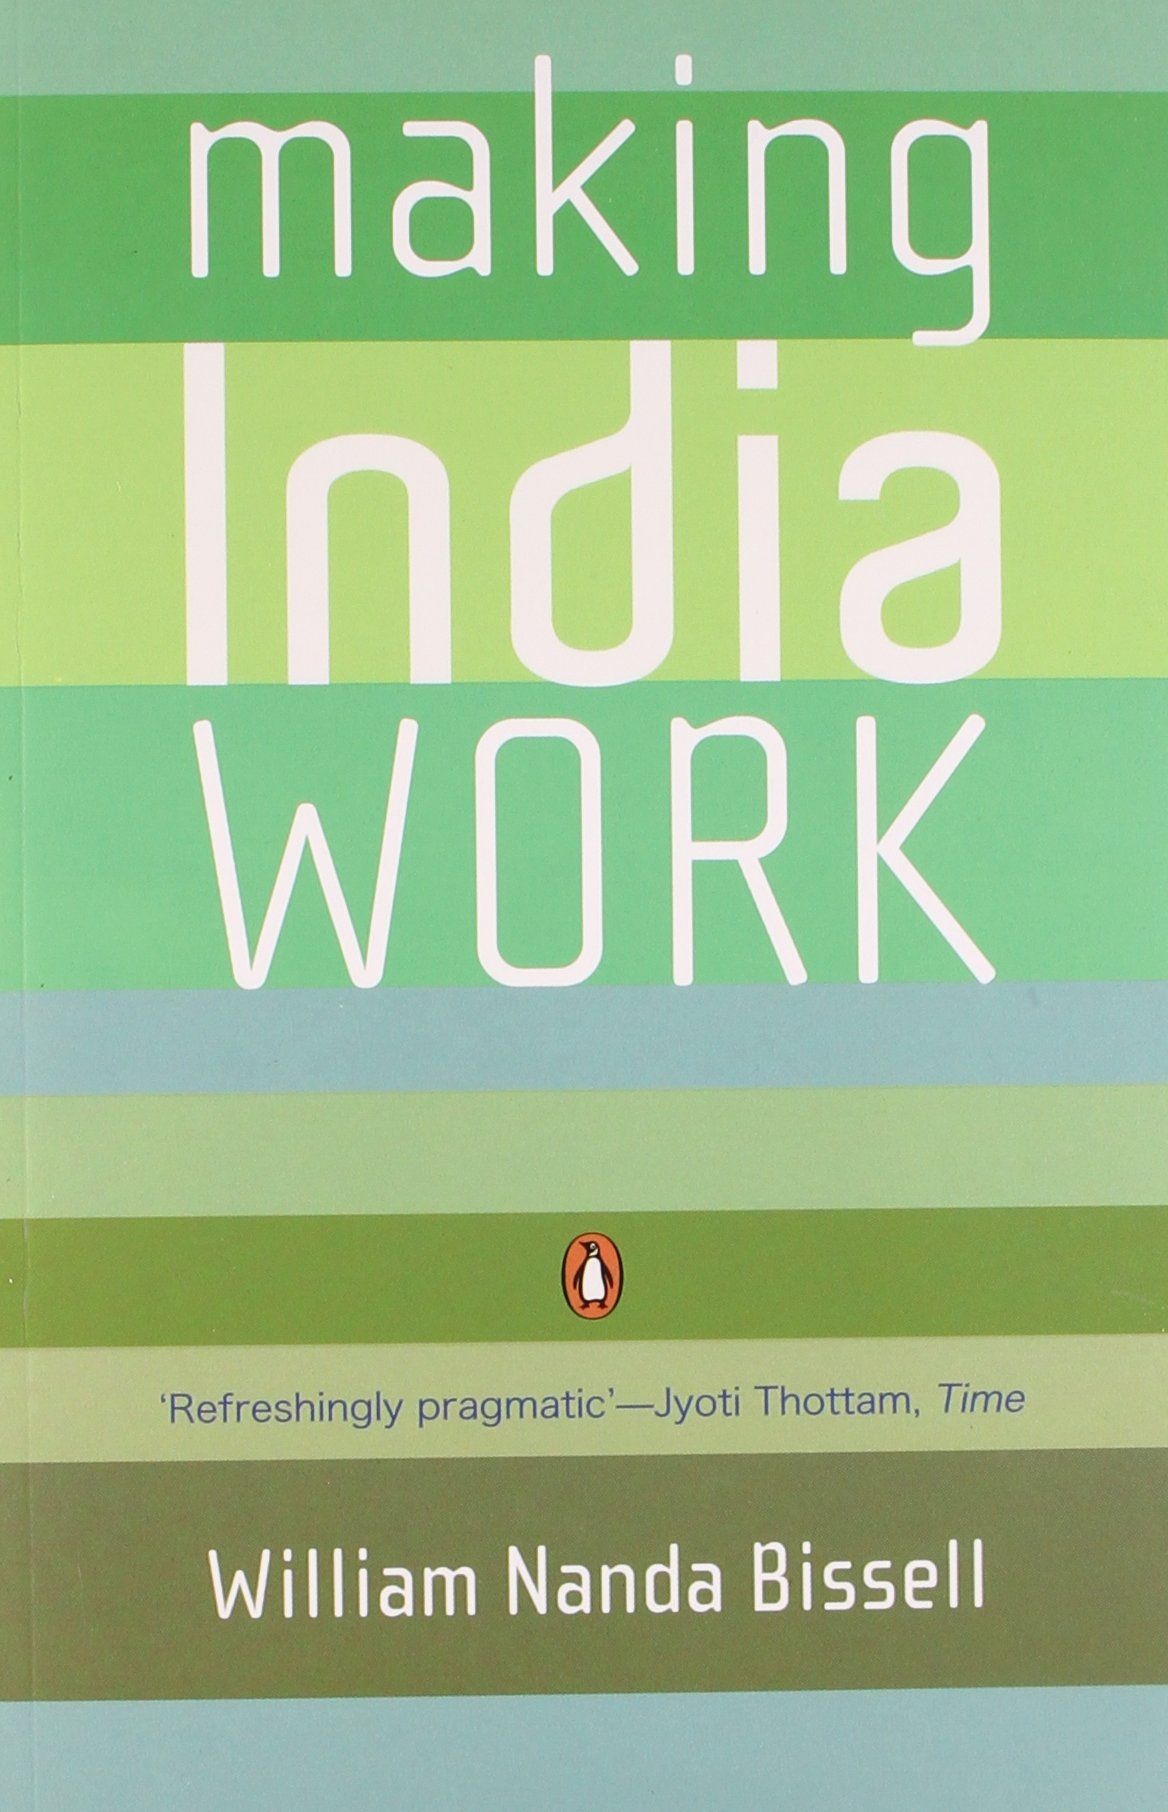 Making India Work (PB)